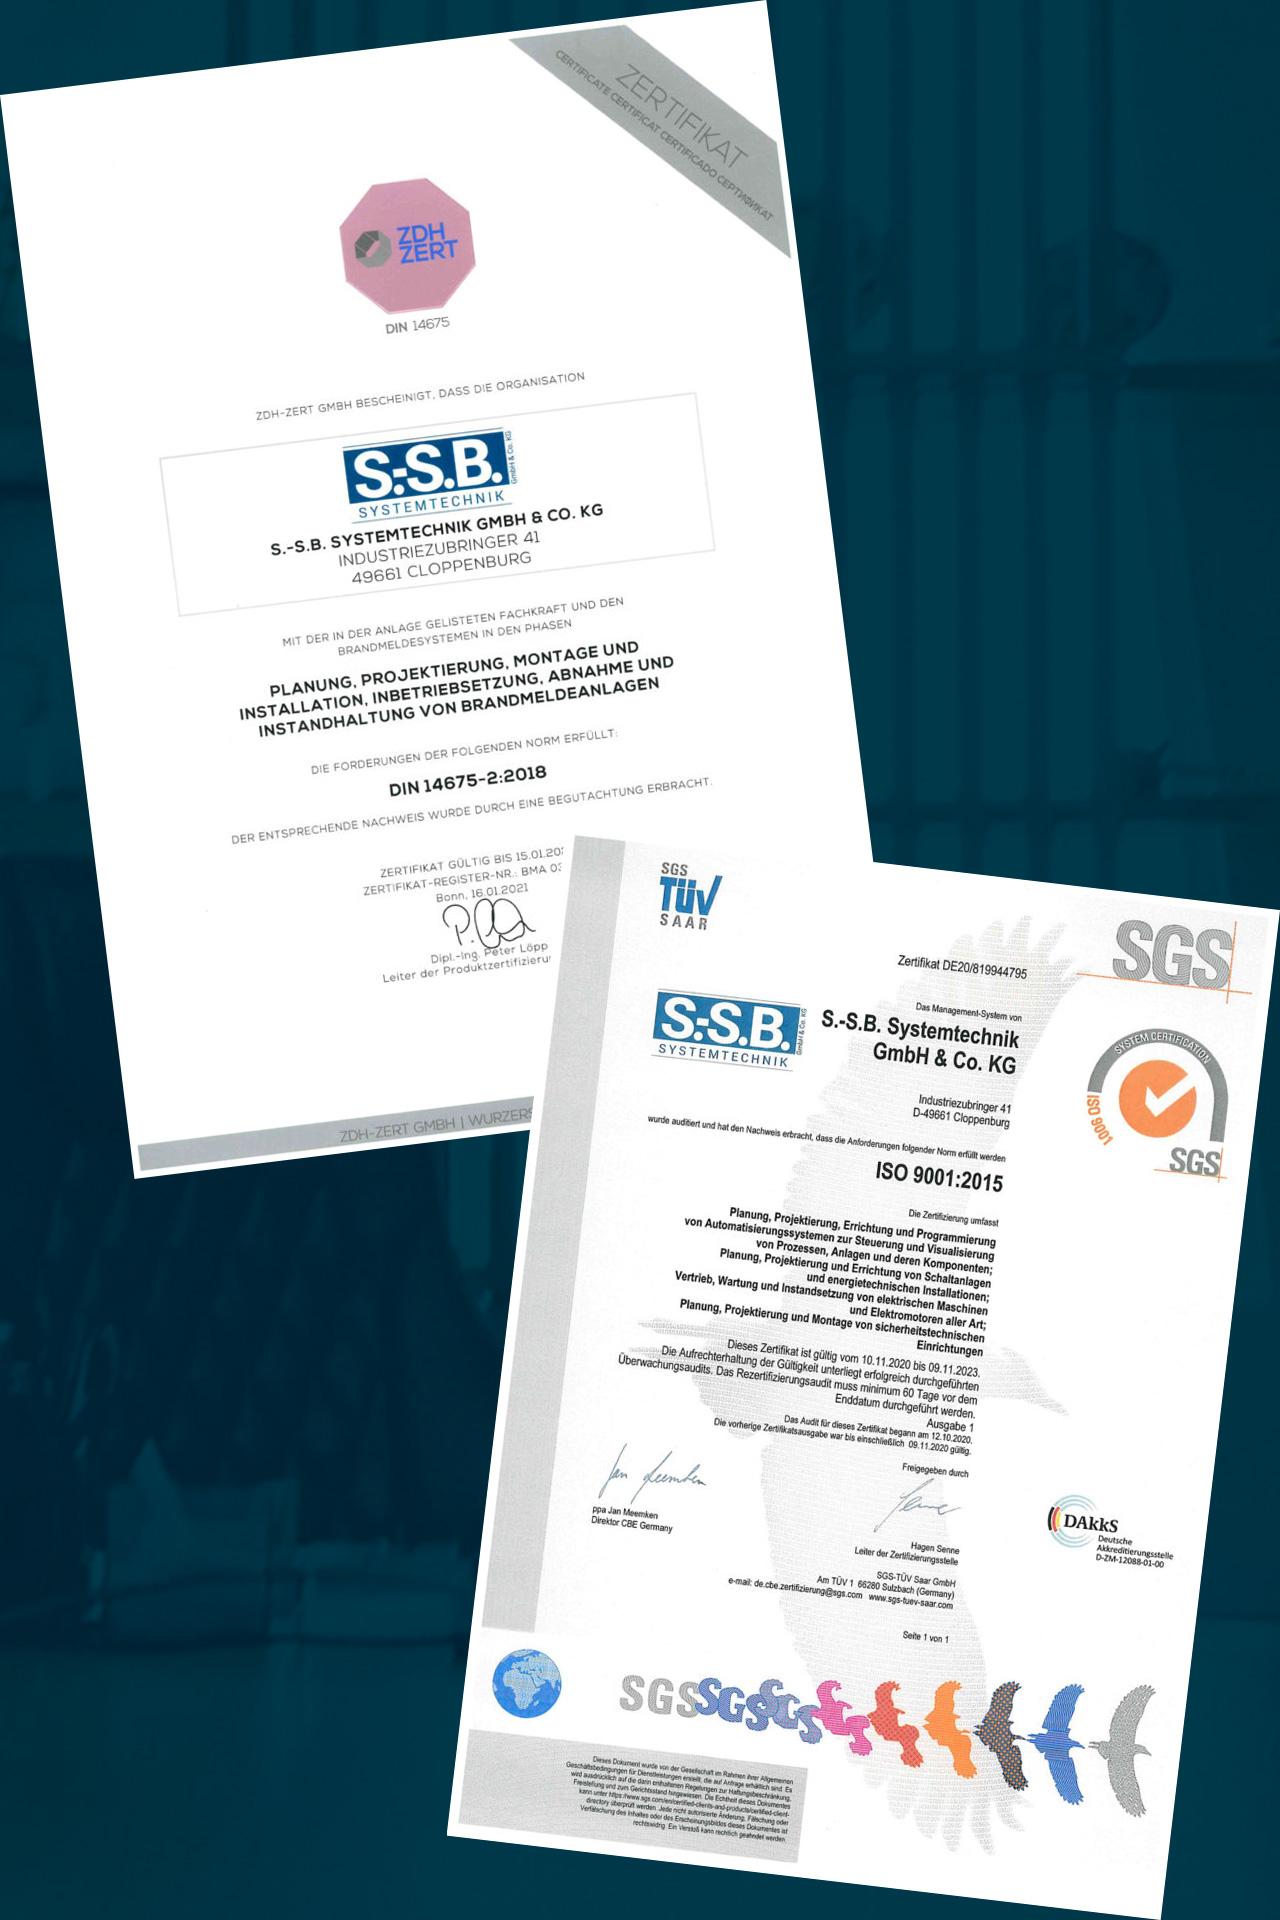 Product Zertifizierte Leistungen bei S.-S.B. - S.-S.B. Systemtechnik image